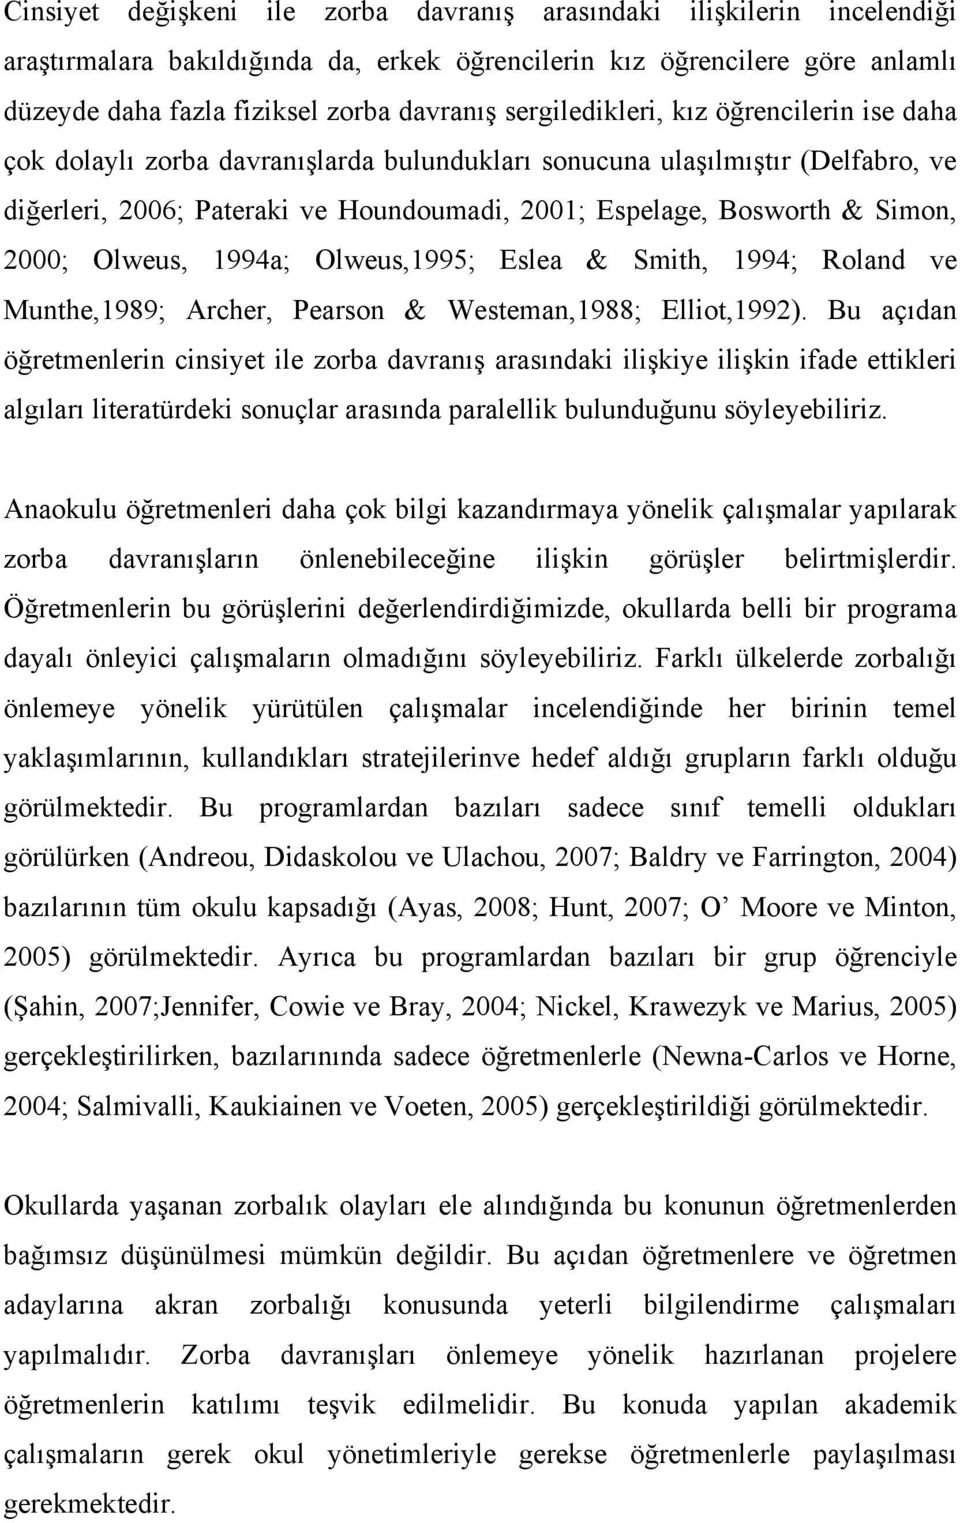 2000; Olweus, 1994a; Olweus,1995; Eslea & Smith, 1994; Roland ve Munthe,1989; Archer, Pearson & Westeman,1988; Elliot,1992).